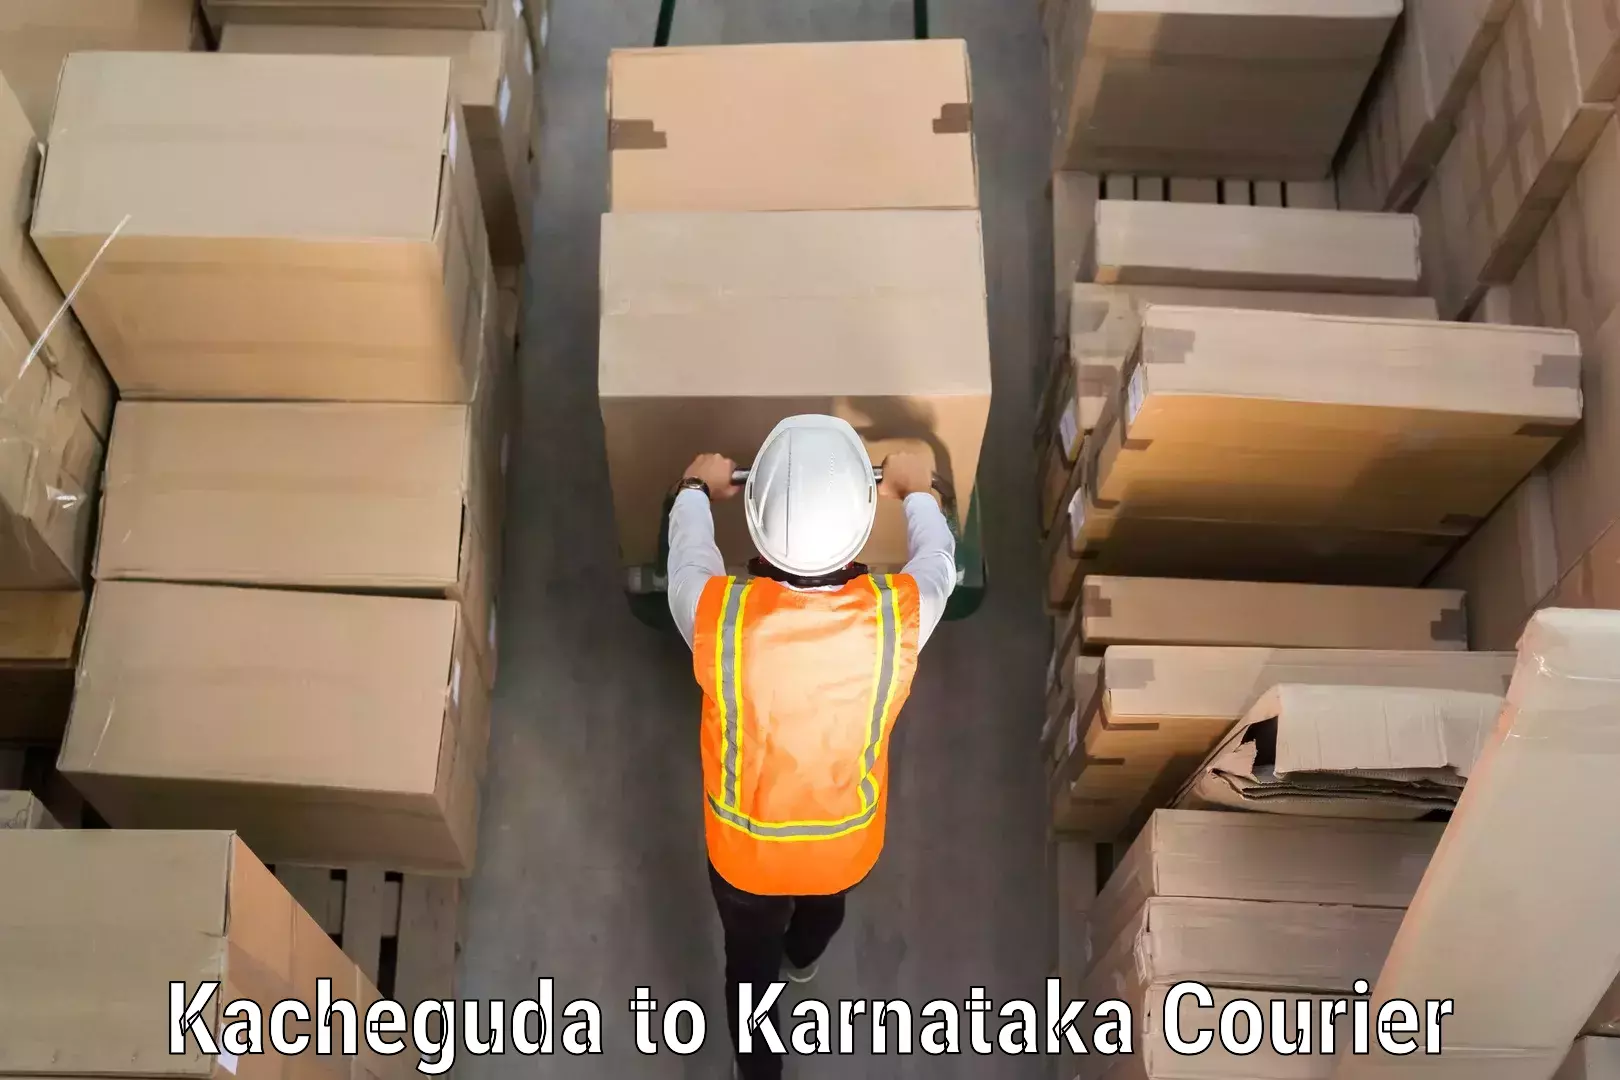 Baggage relocation service in Kacheguda to Karnataka